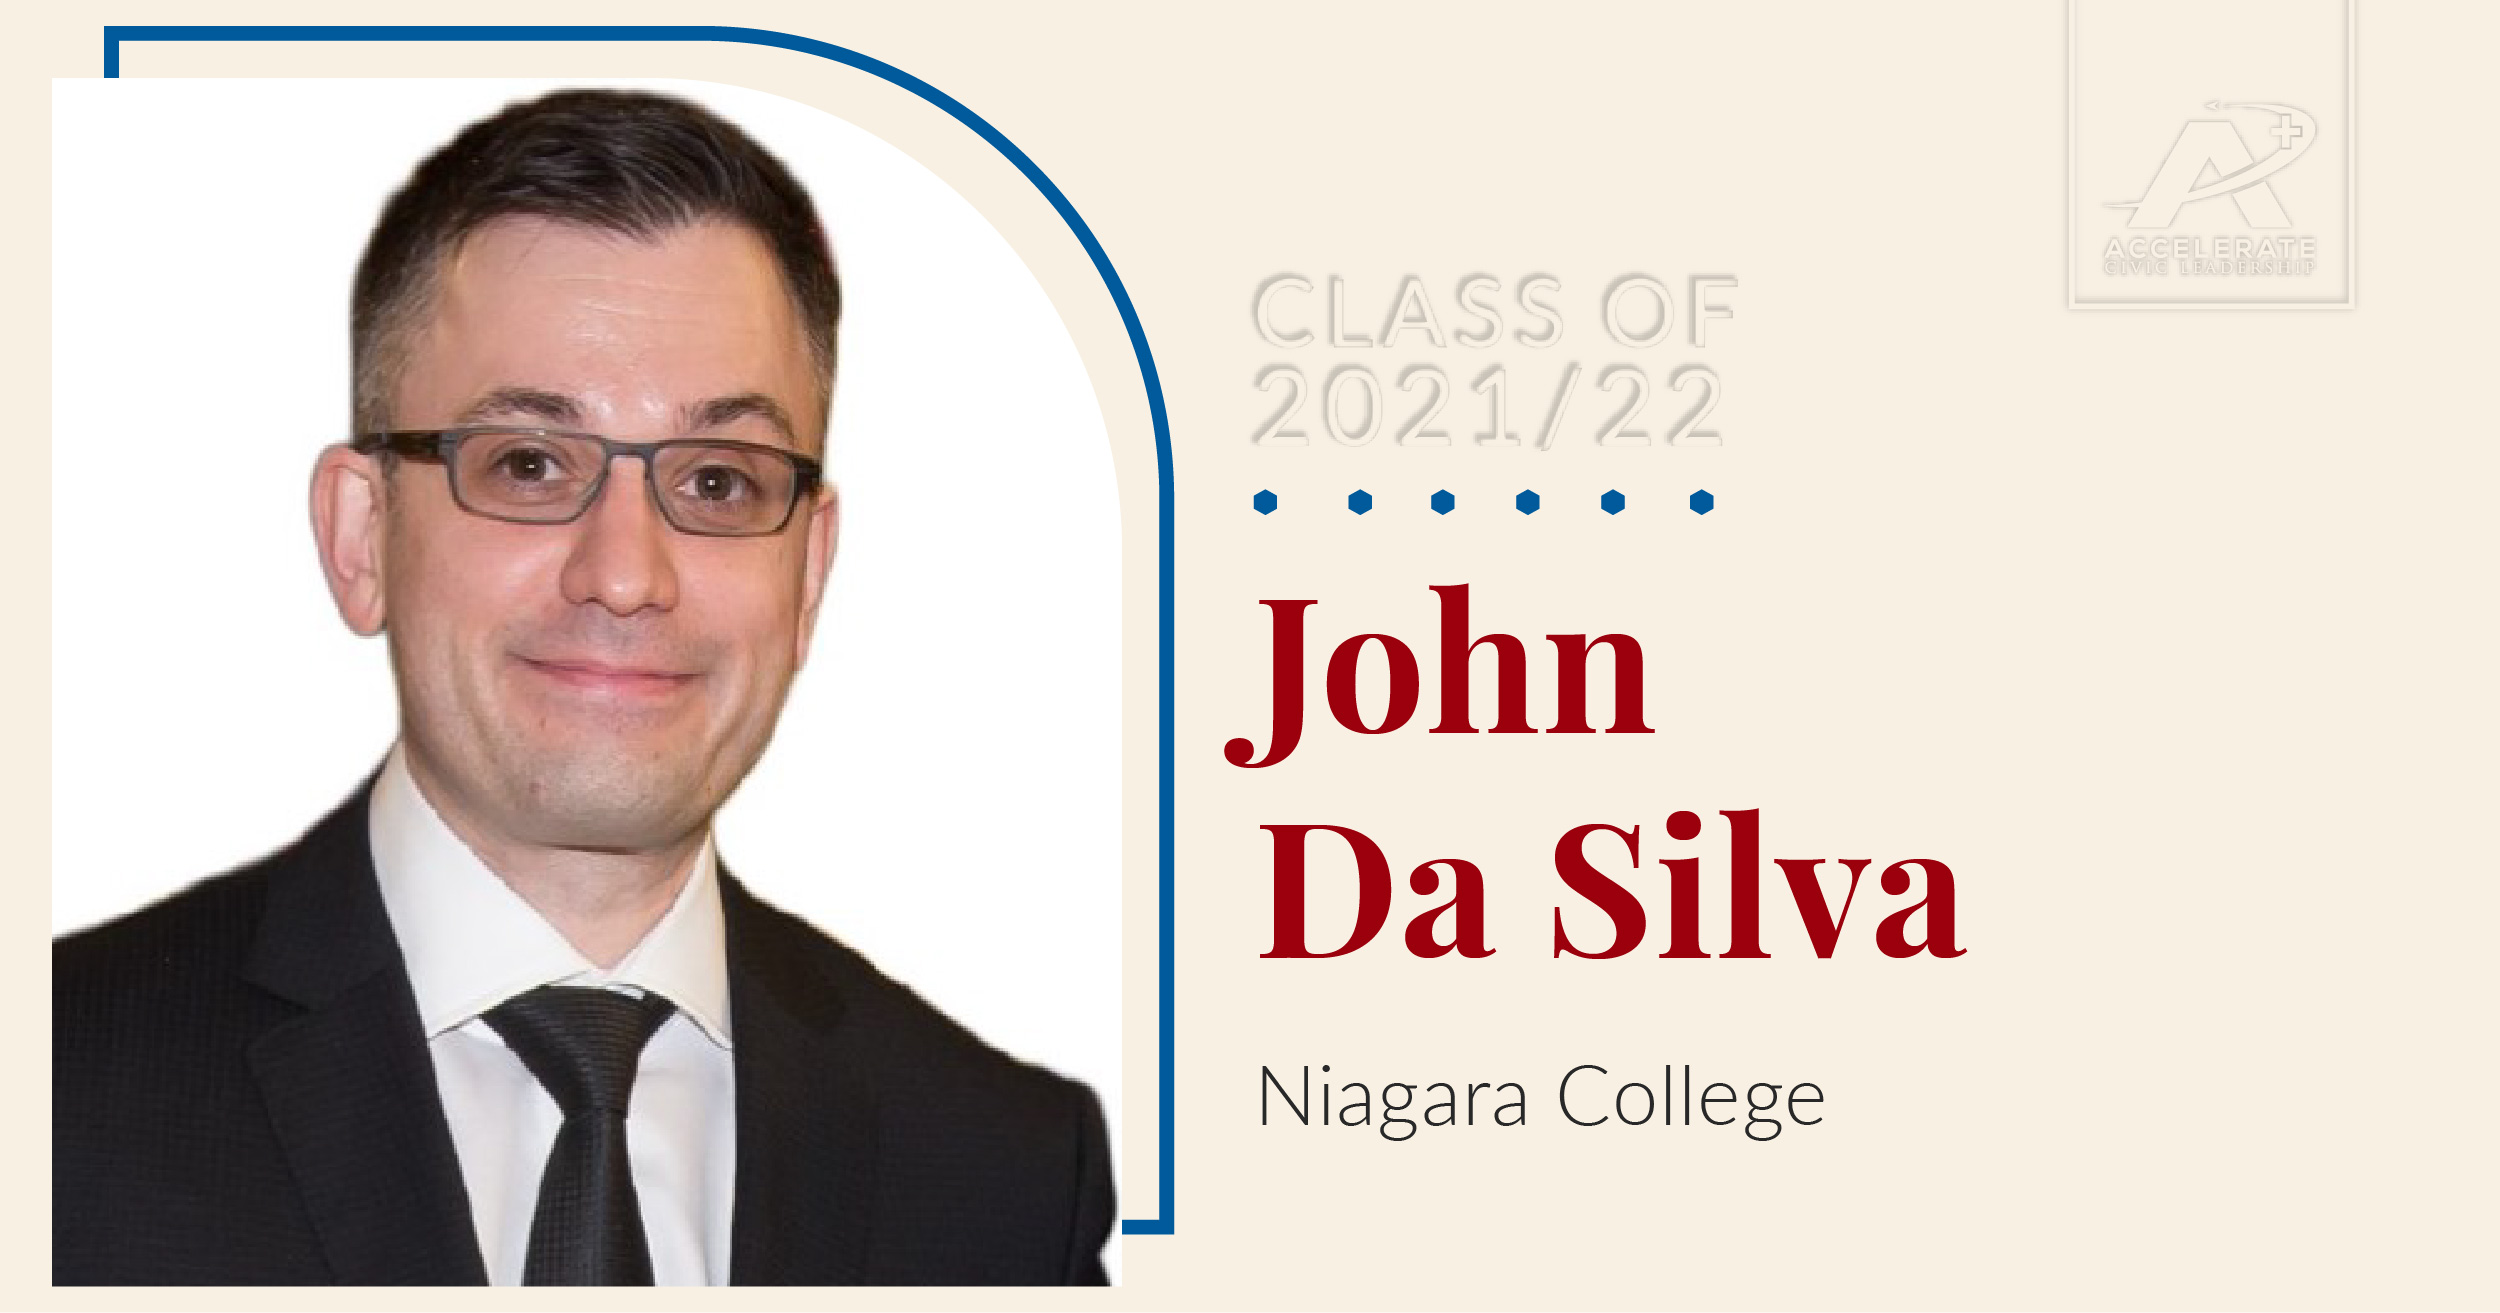 Leader spotlight for John Da Silva, Associate Dean, School of Technology, Niagara College